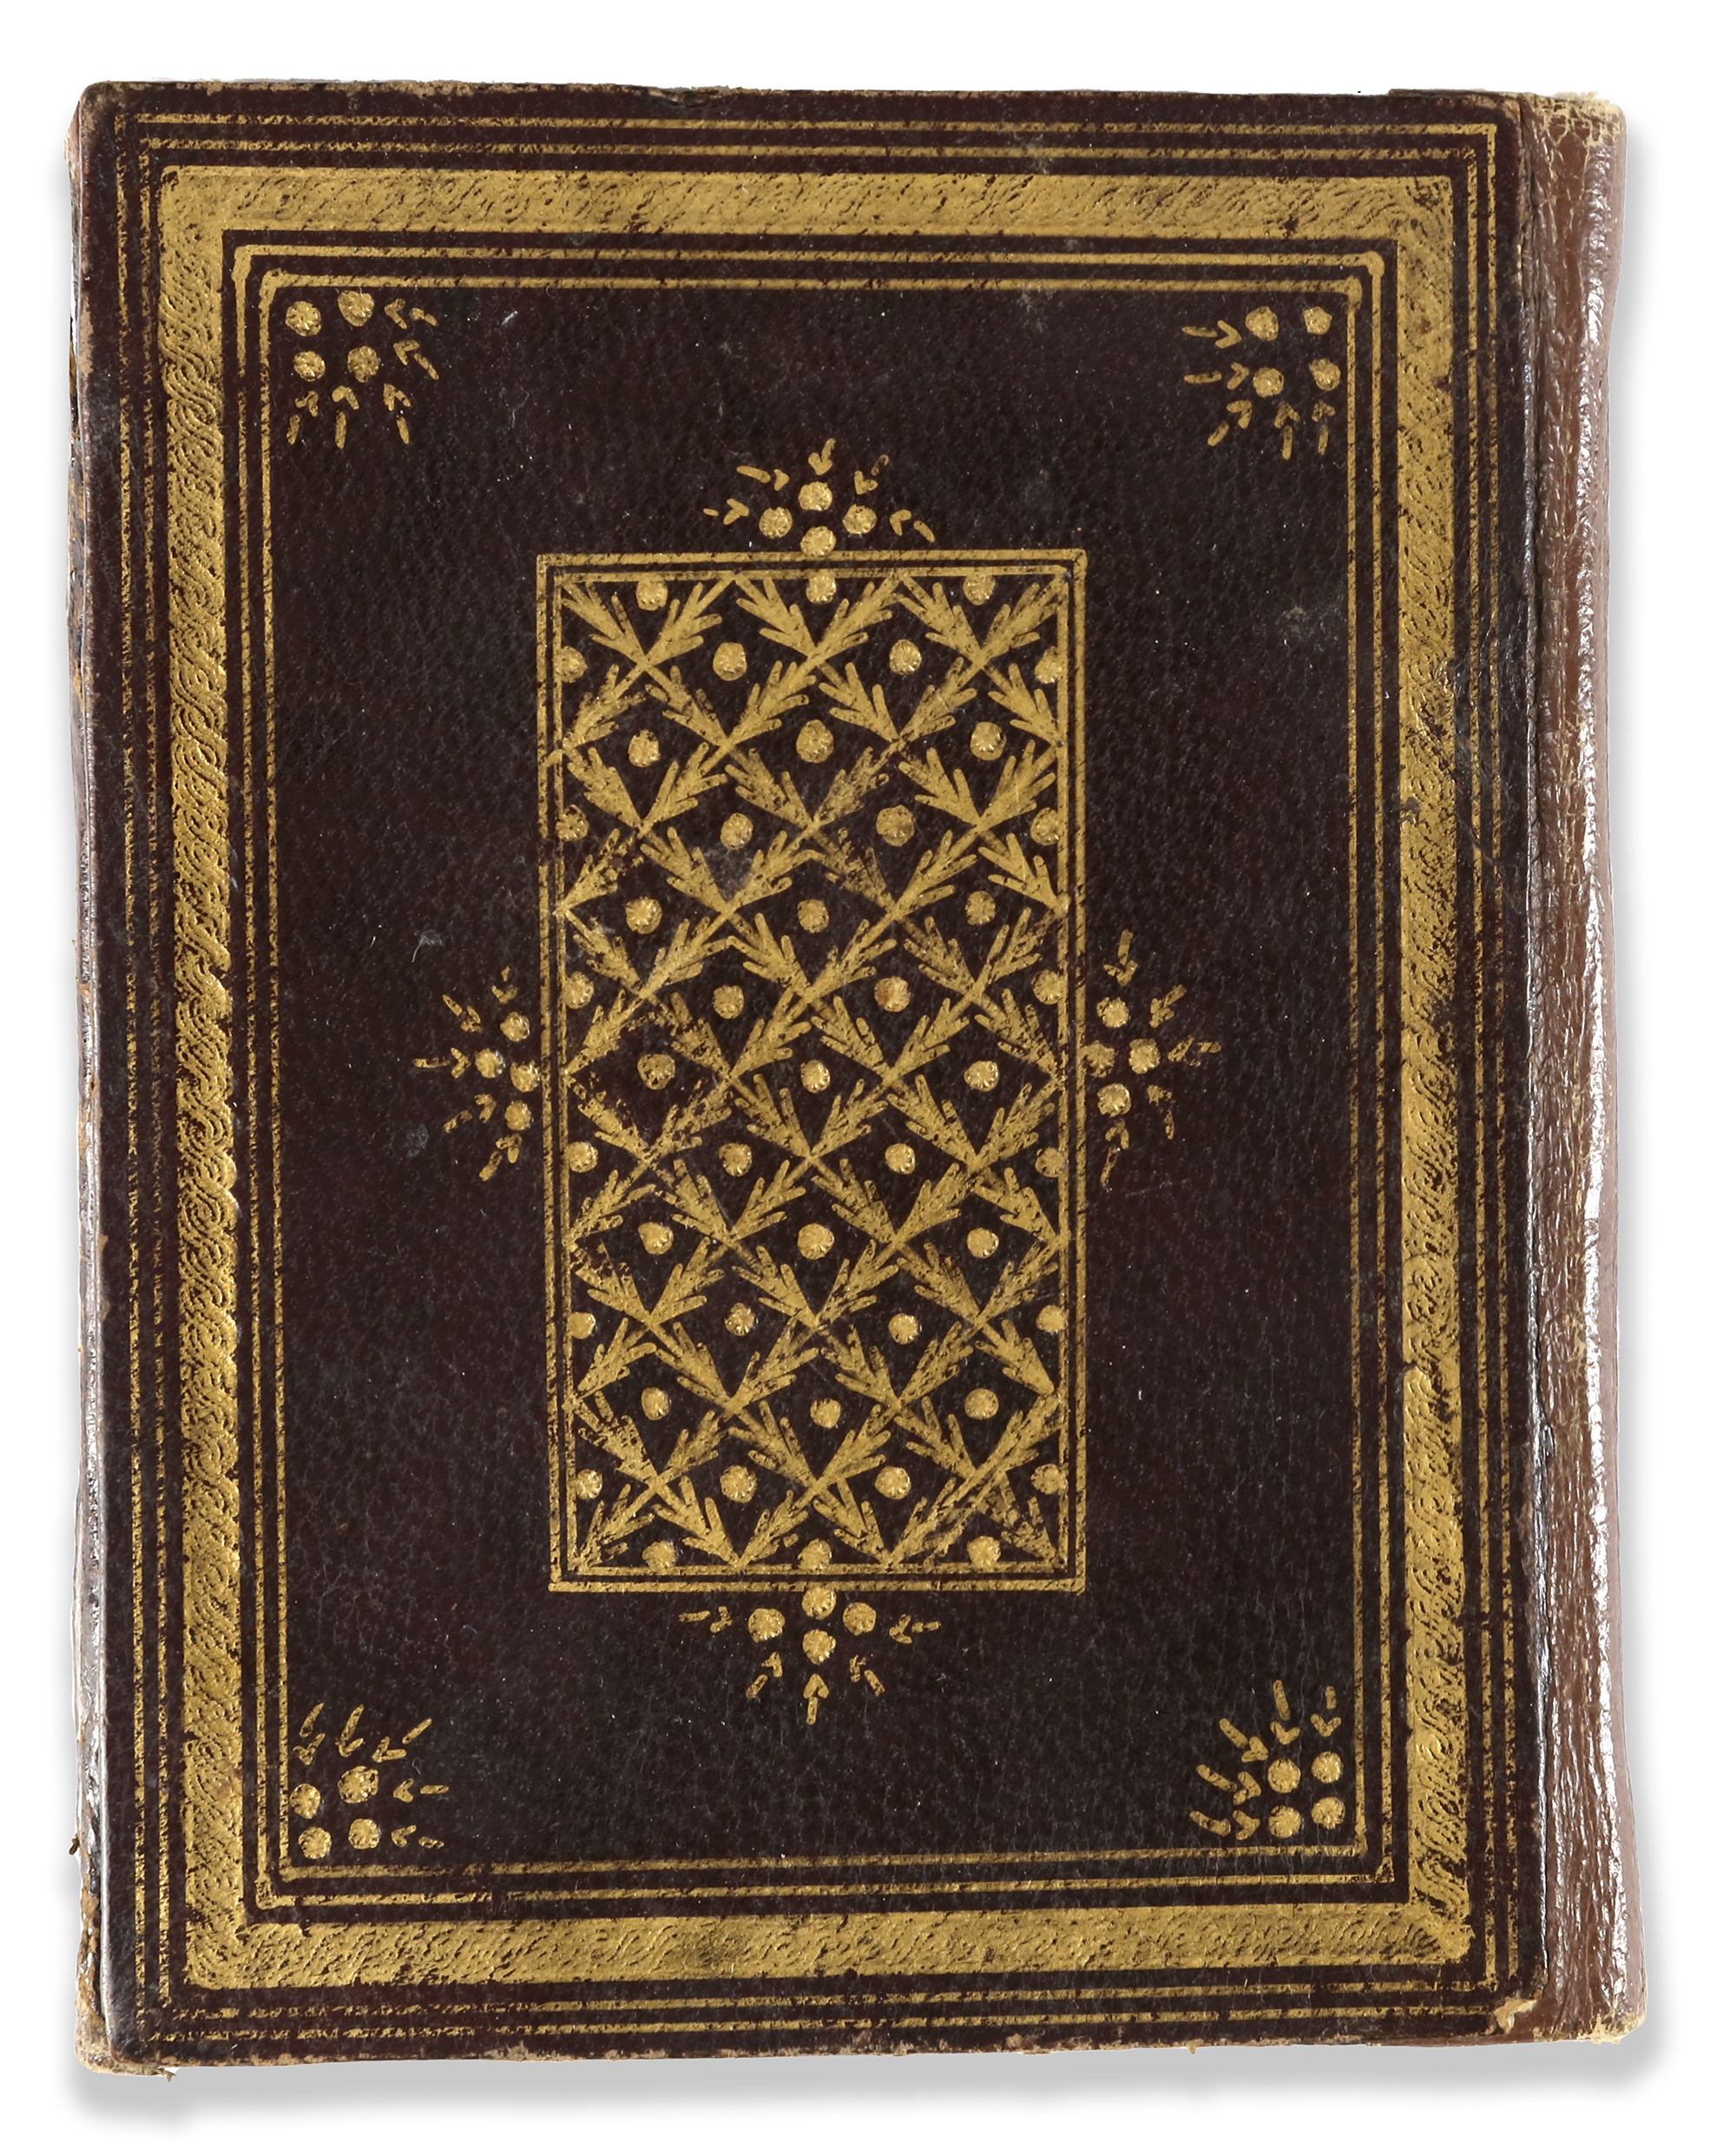 AN OTTOMAN PRAYER BOOK BY MEHMED ARIF EFENDI, 1266 AH/1849 AD - Image 3 of 3